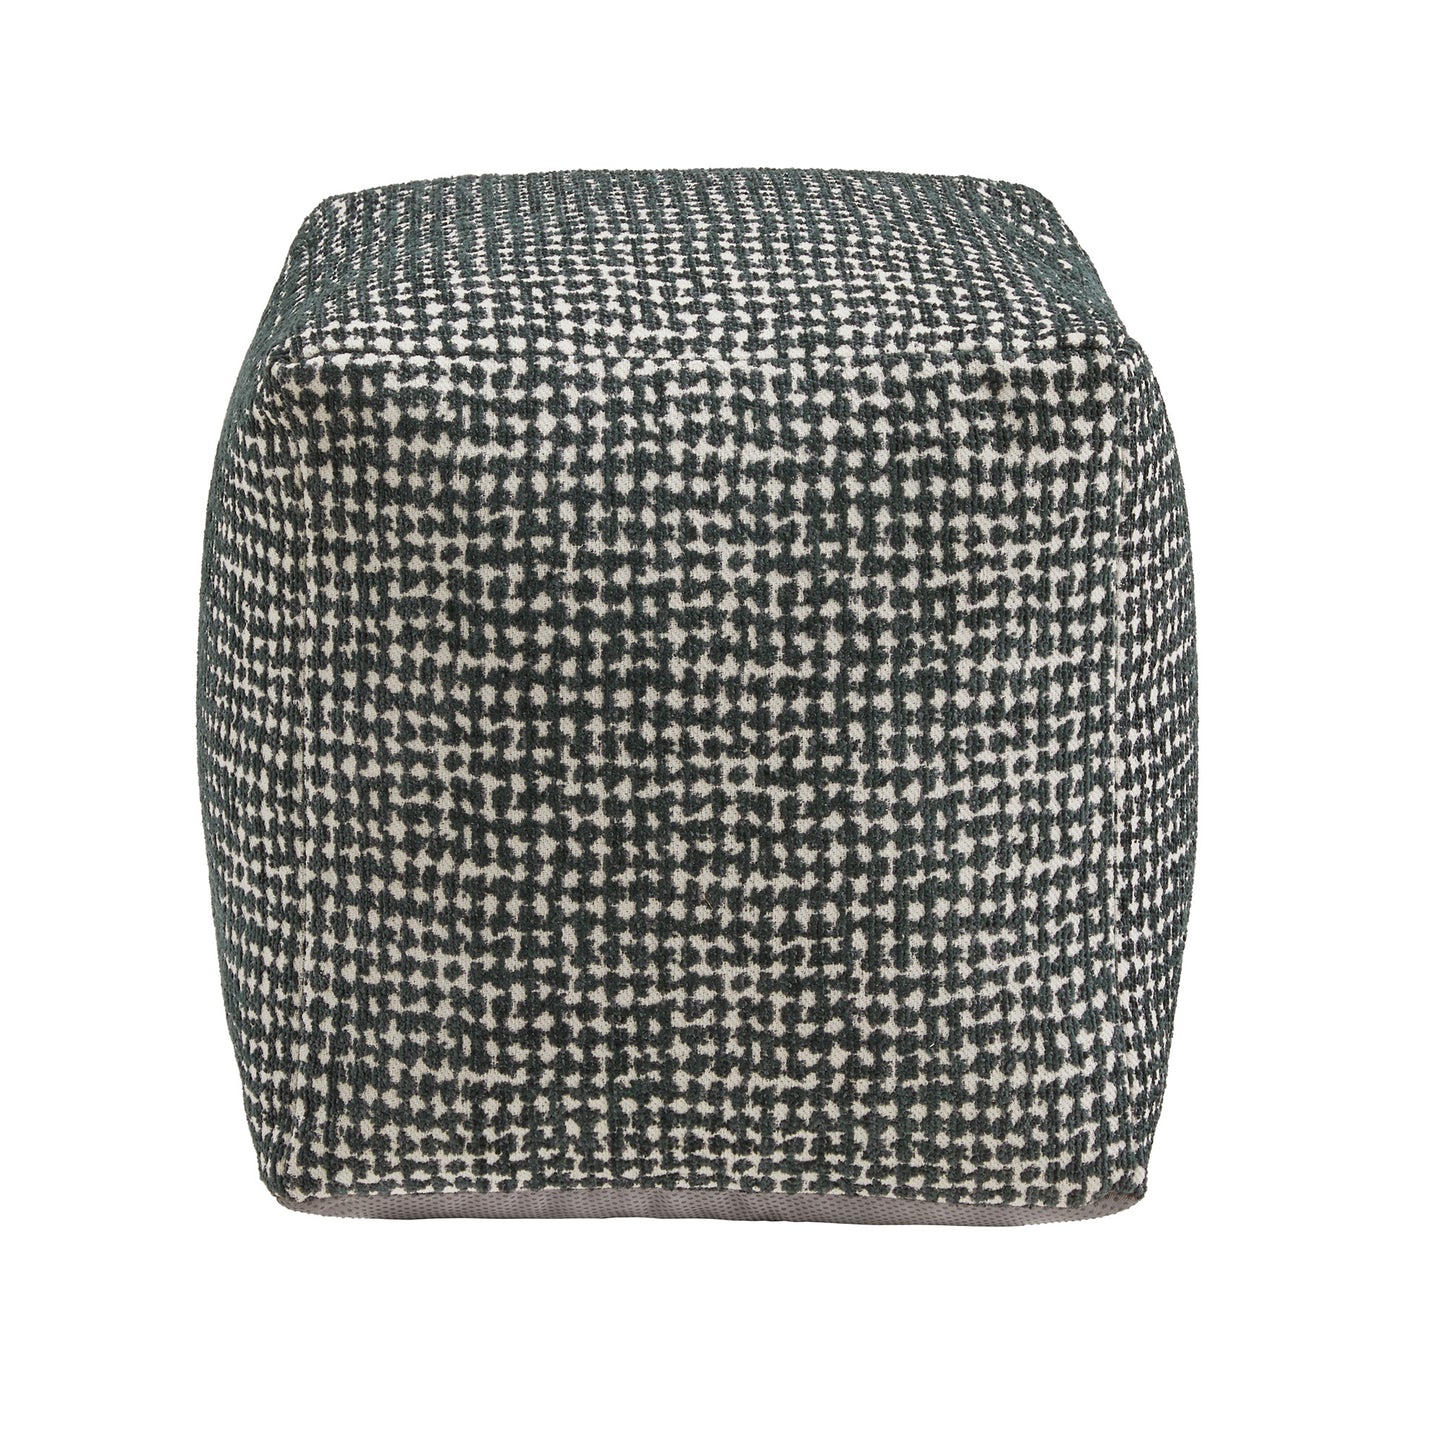 Upholstered Square Pouf Ottoman - Dark Green & White Dot Pattern Fabric